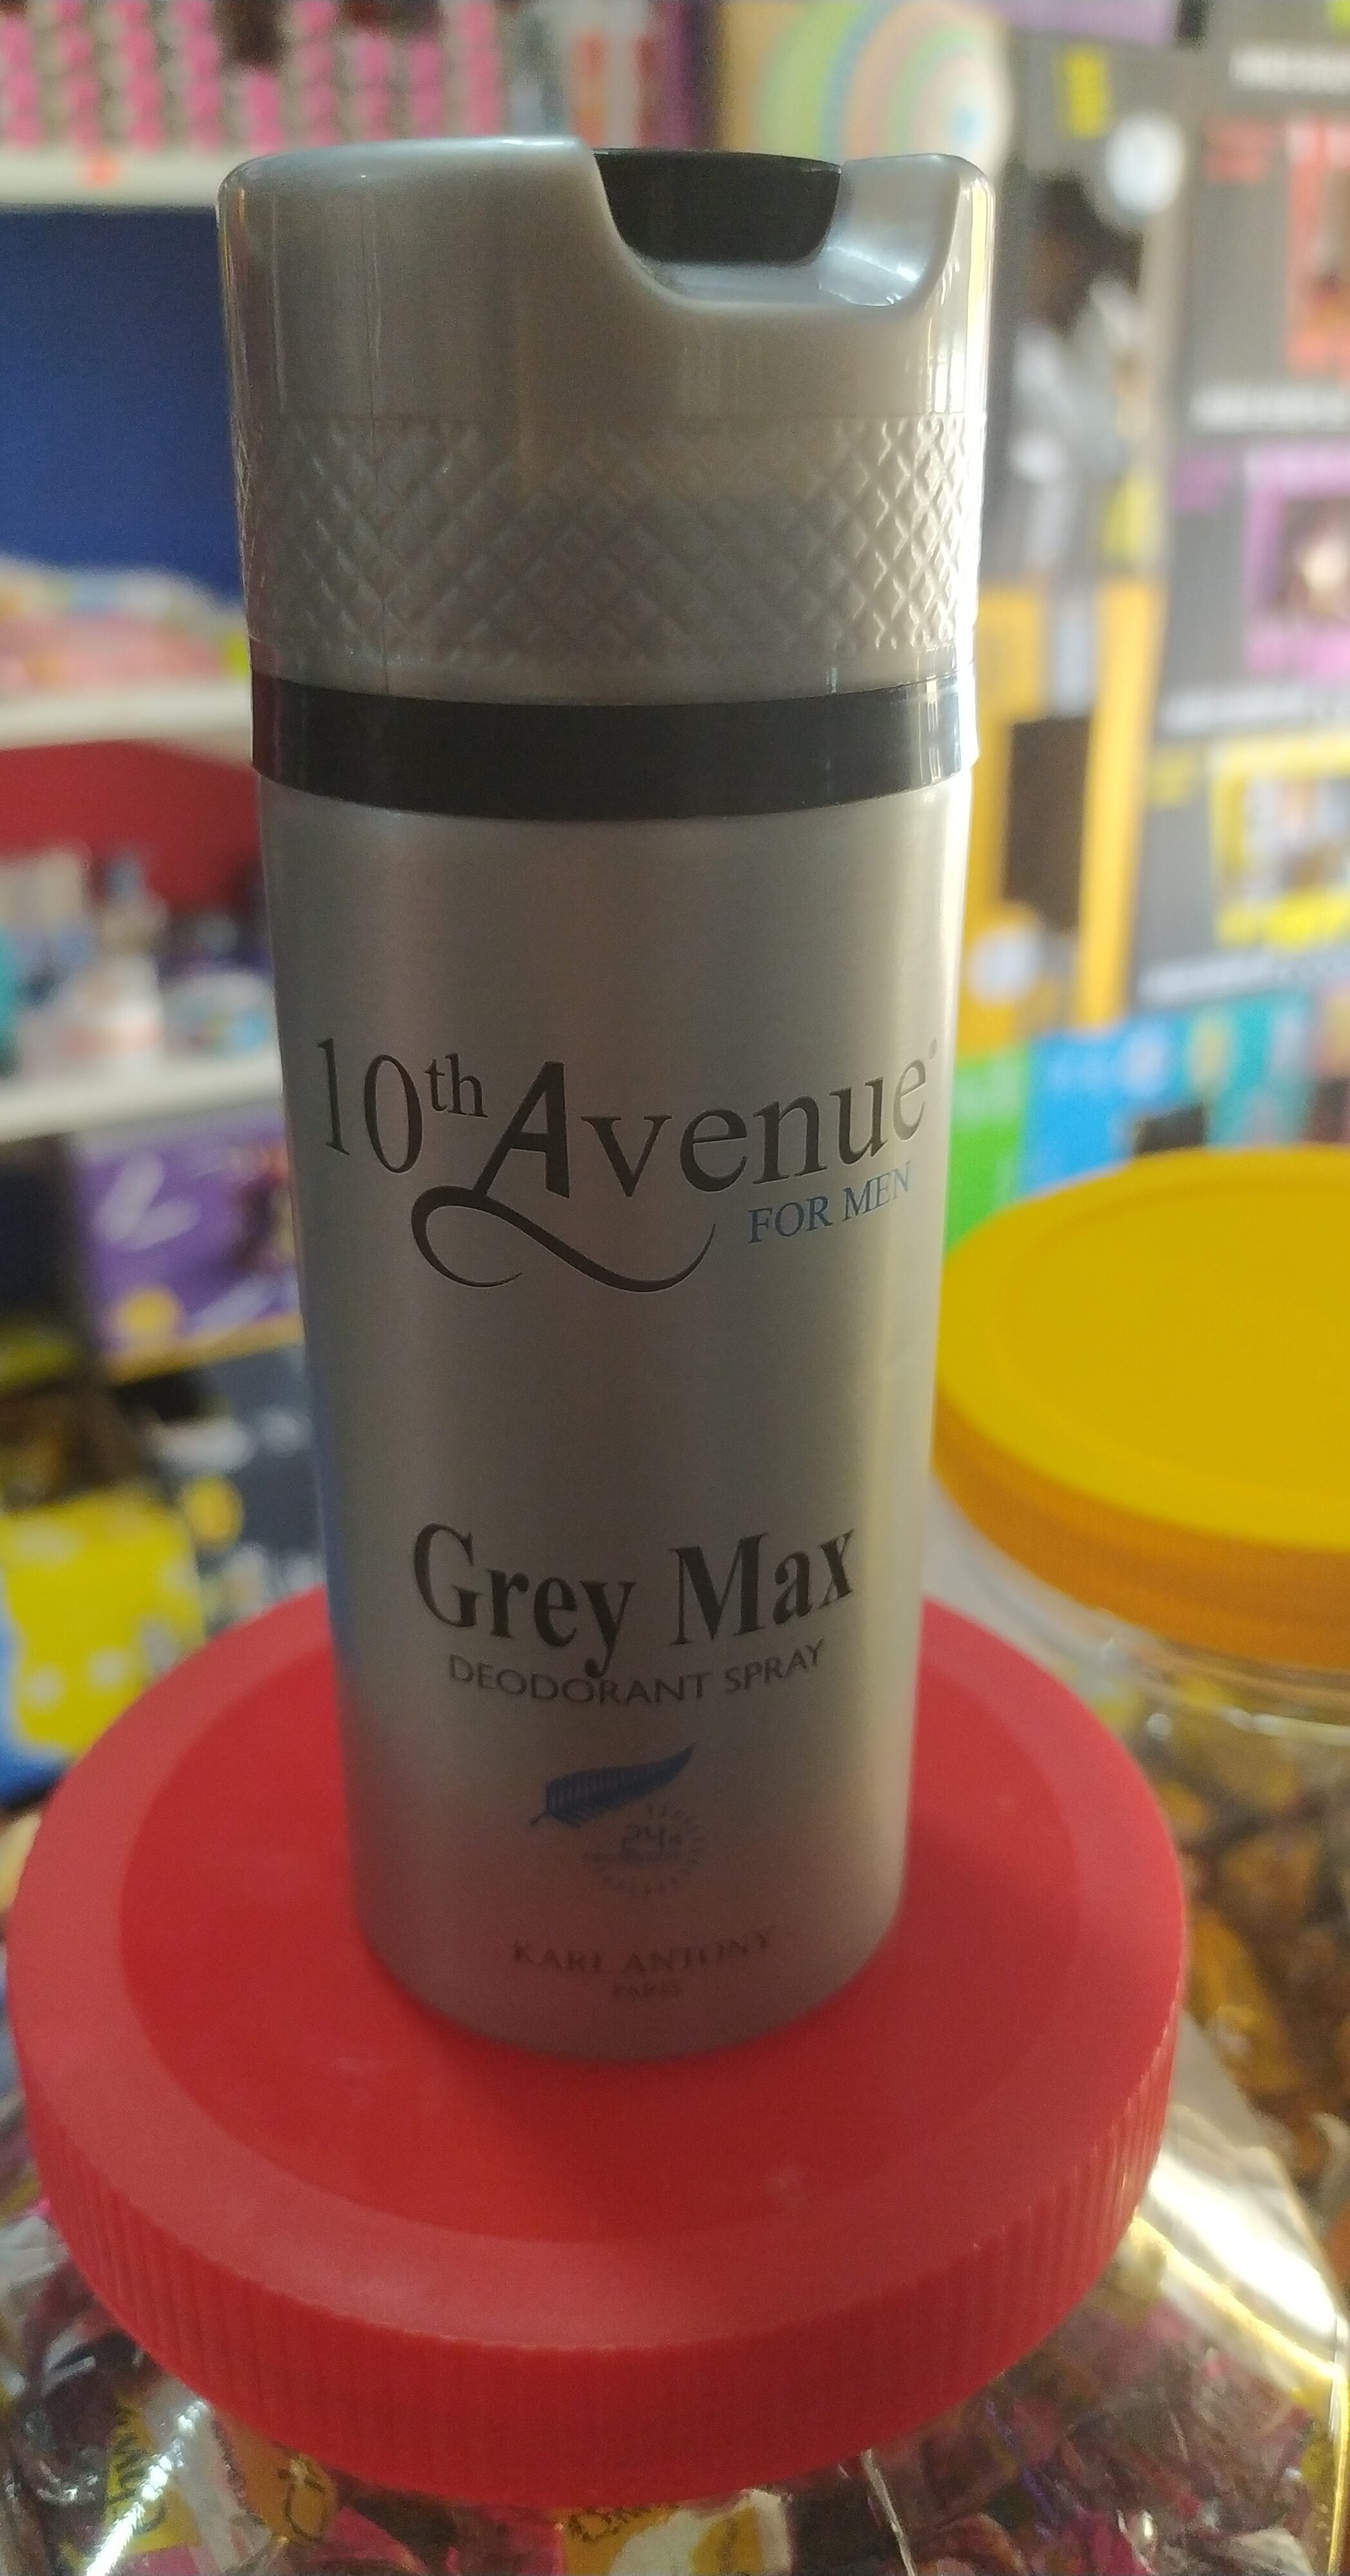 10th avenue grey max - Produkt - en